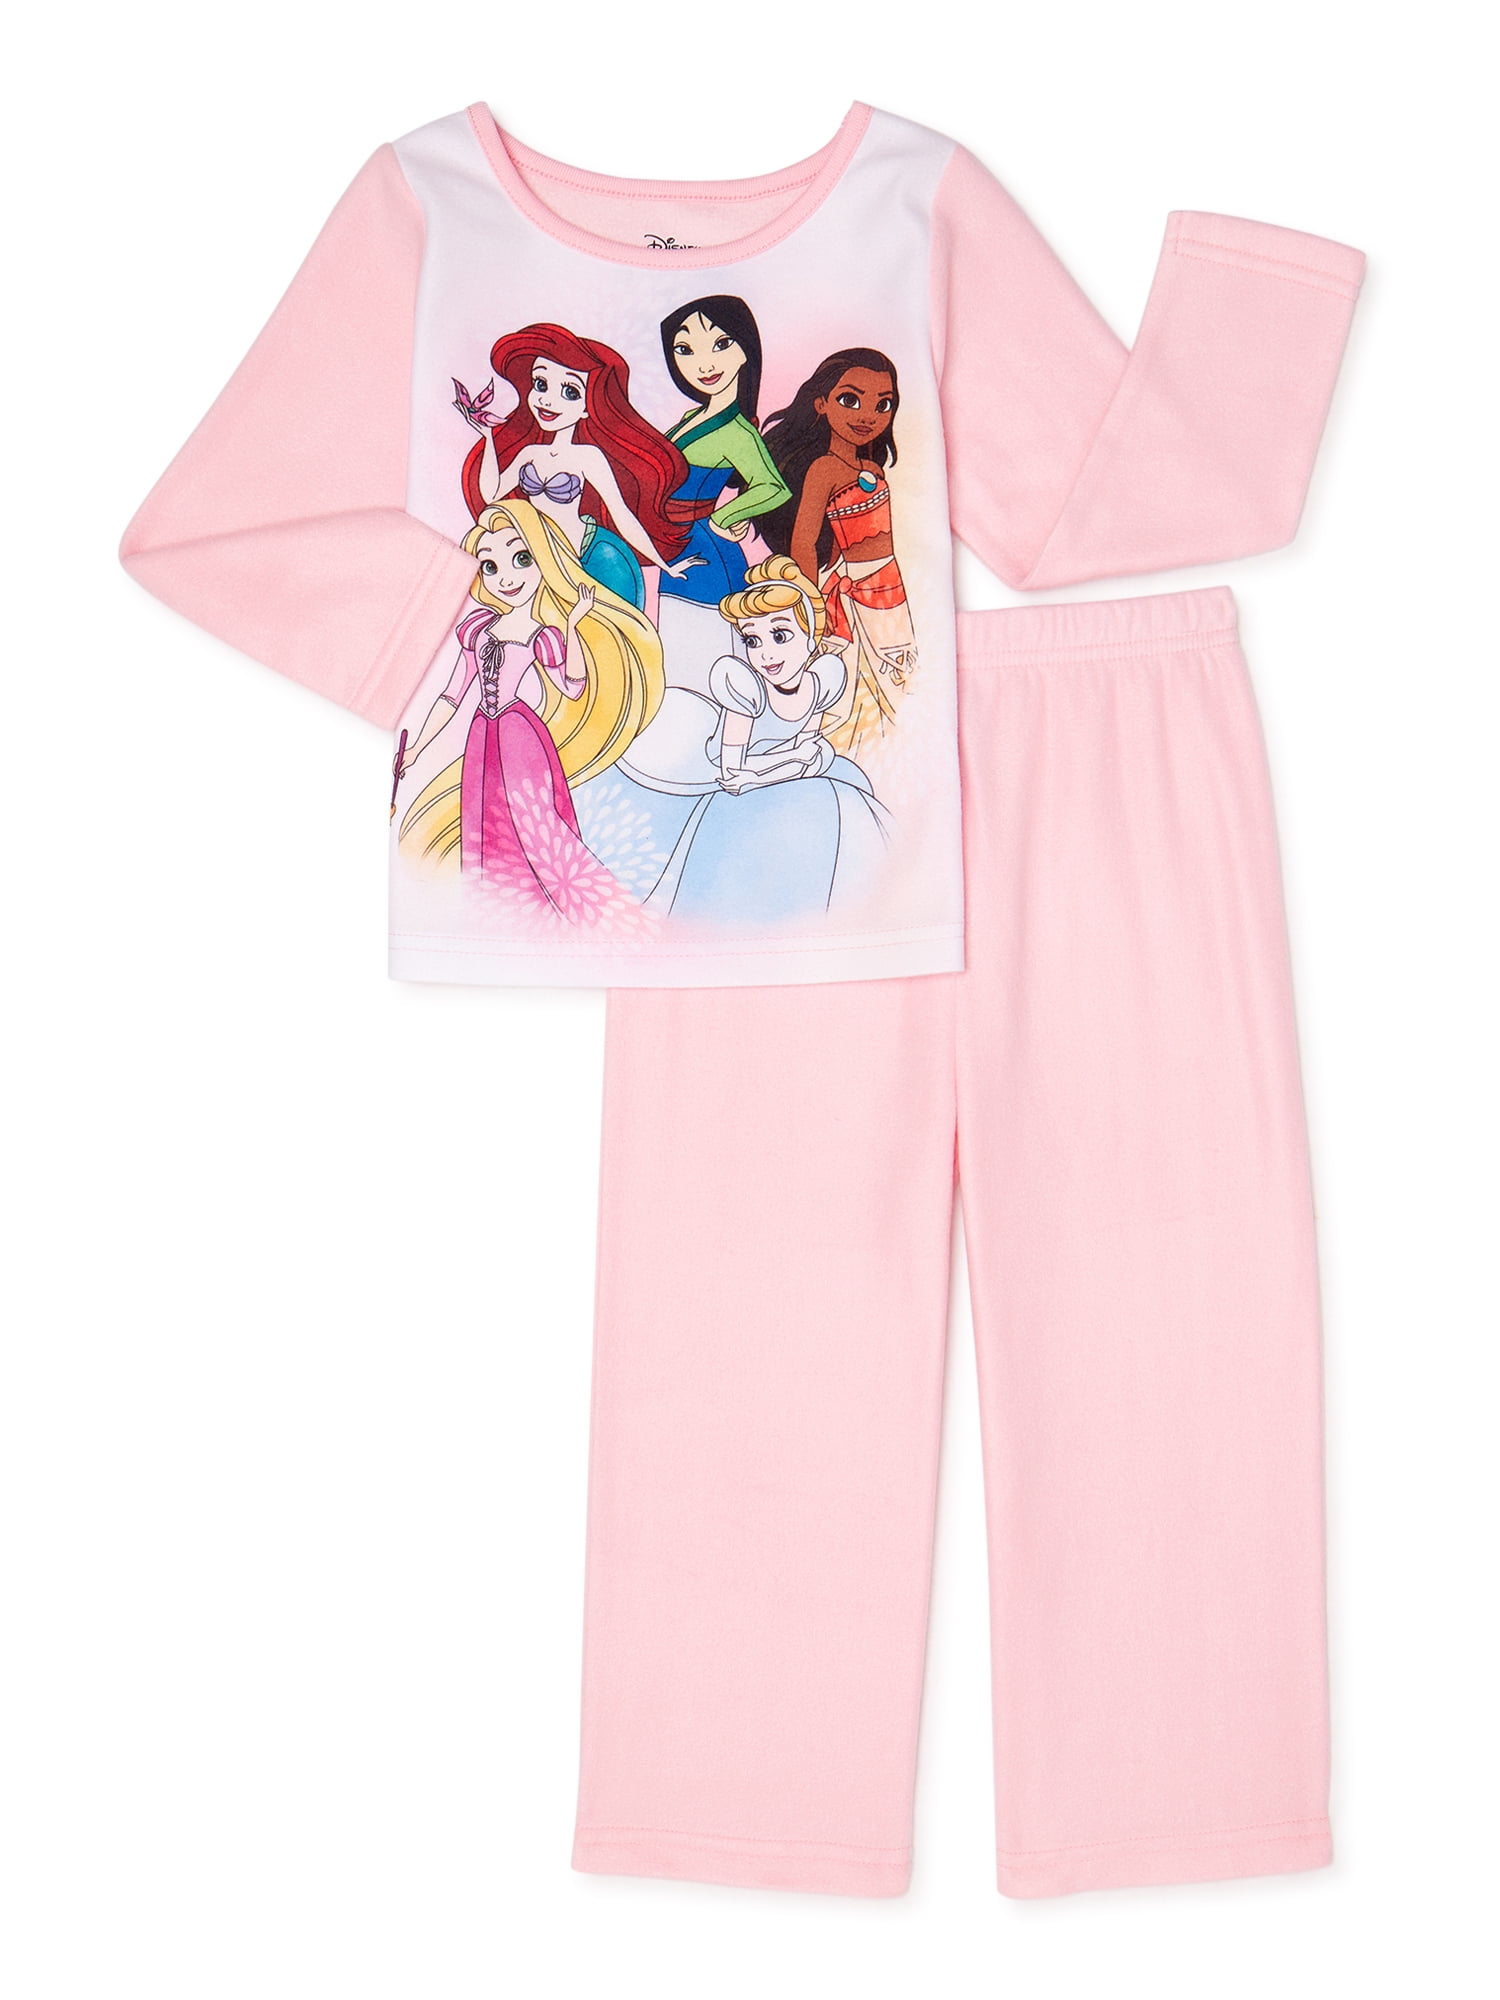 3 5/6 4 Disney Store Princess Short Sleep Set Pajama Sleepwear for Girls 2 